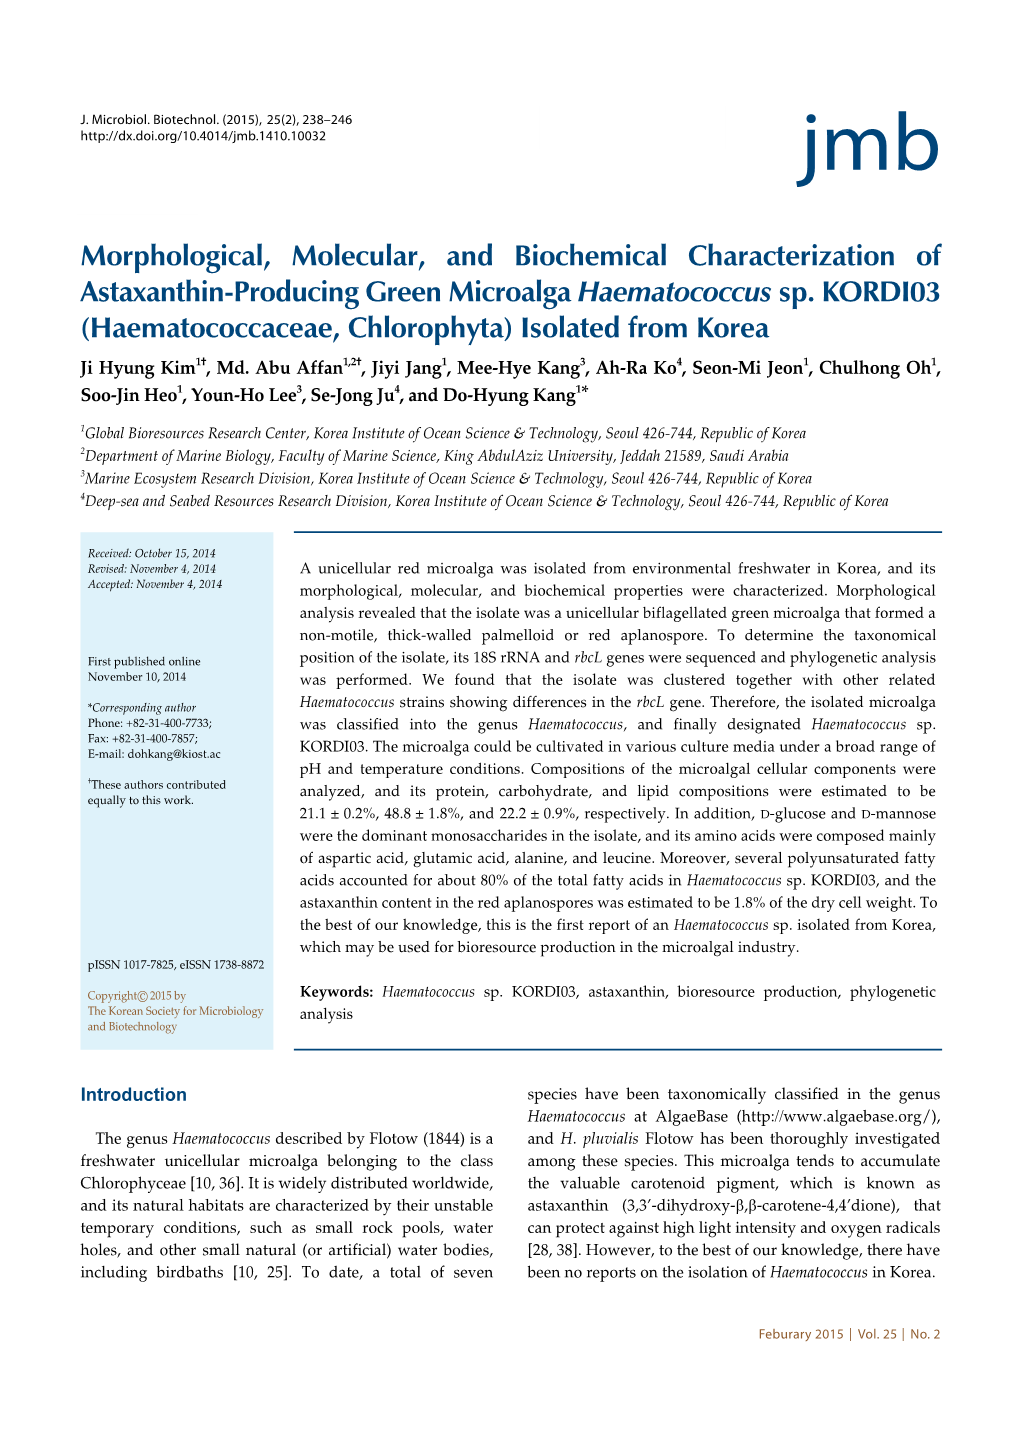 Morphological, Molecular, and Biochemical Characterization of Astaxanthin-Producing Green Microalga Haematococcus Sp